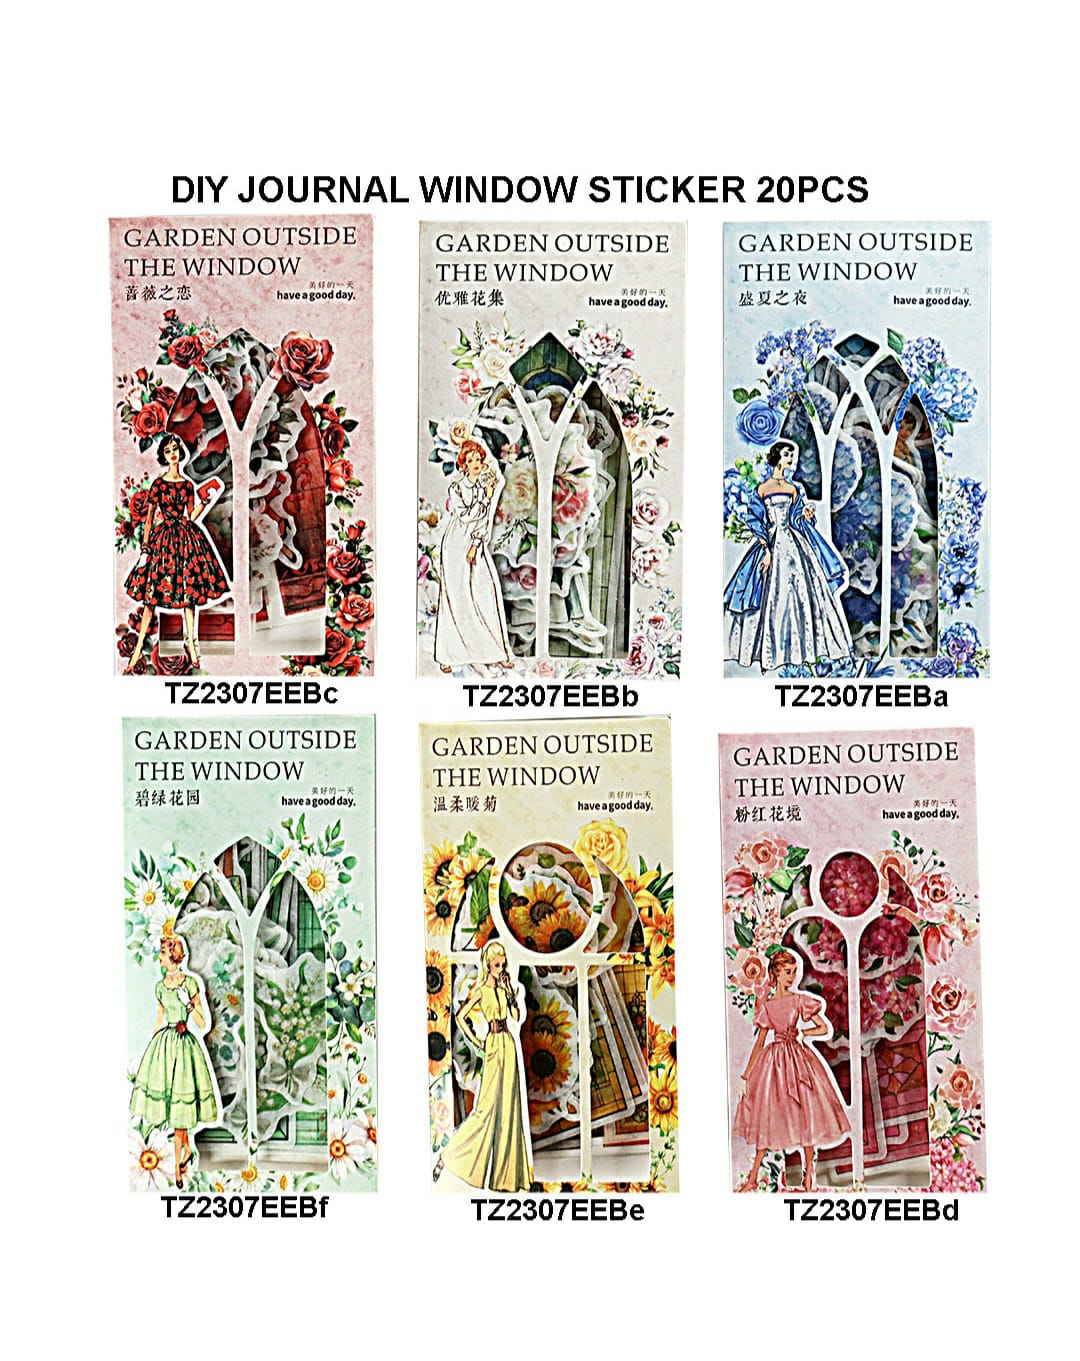 Diy Journal Window Sticker 20Pcs 183 Tz2307Eeb | INKARTO